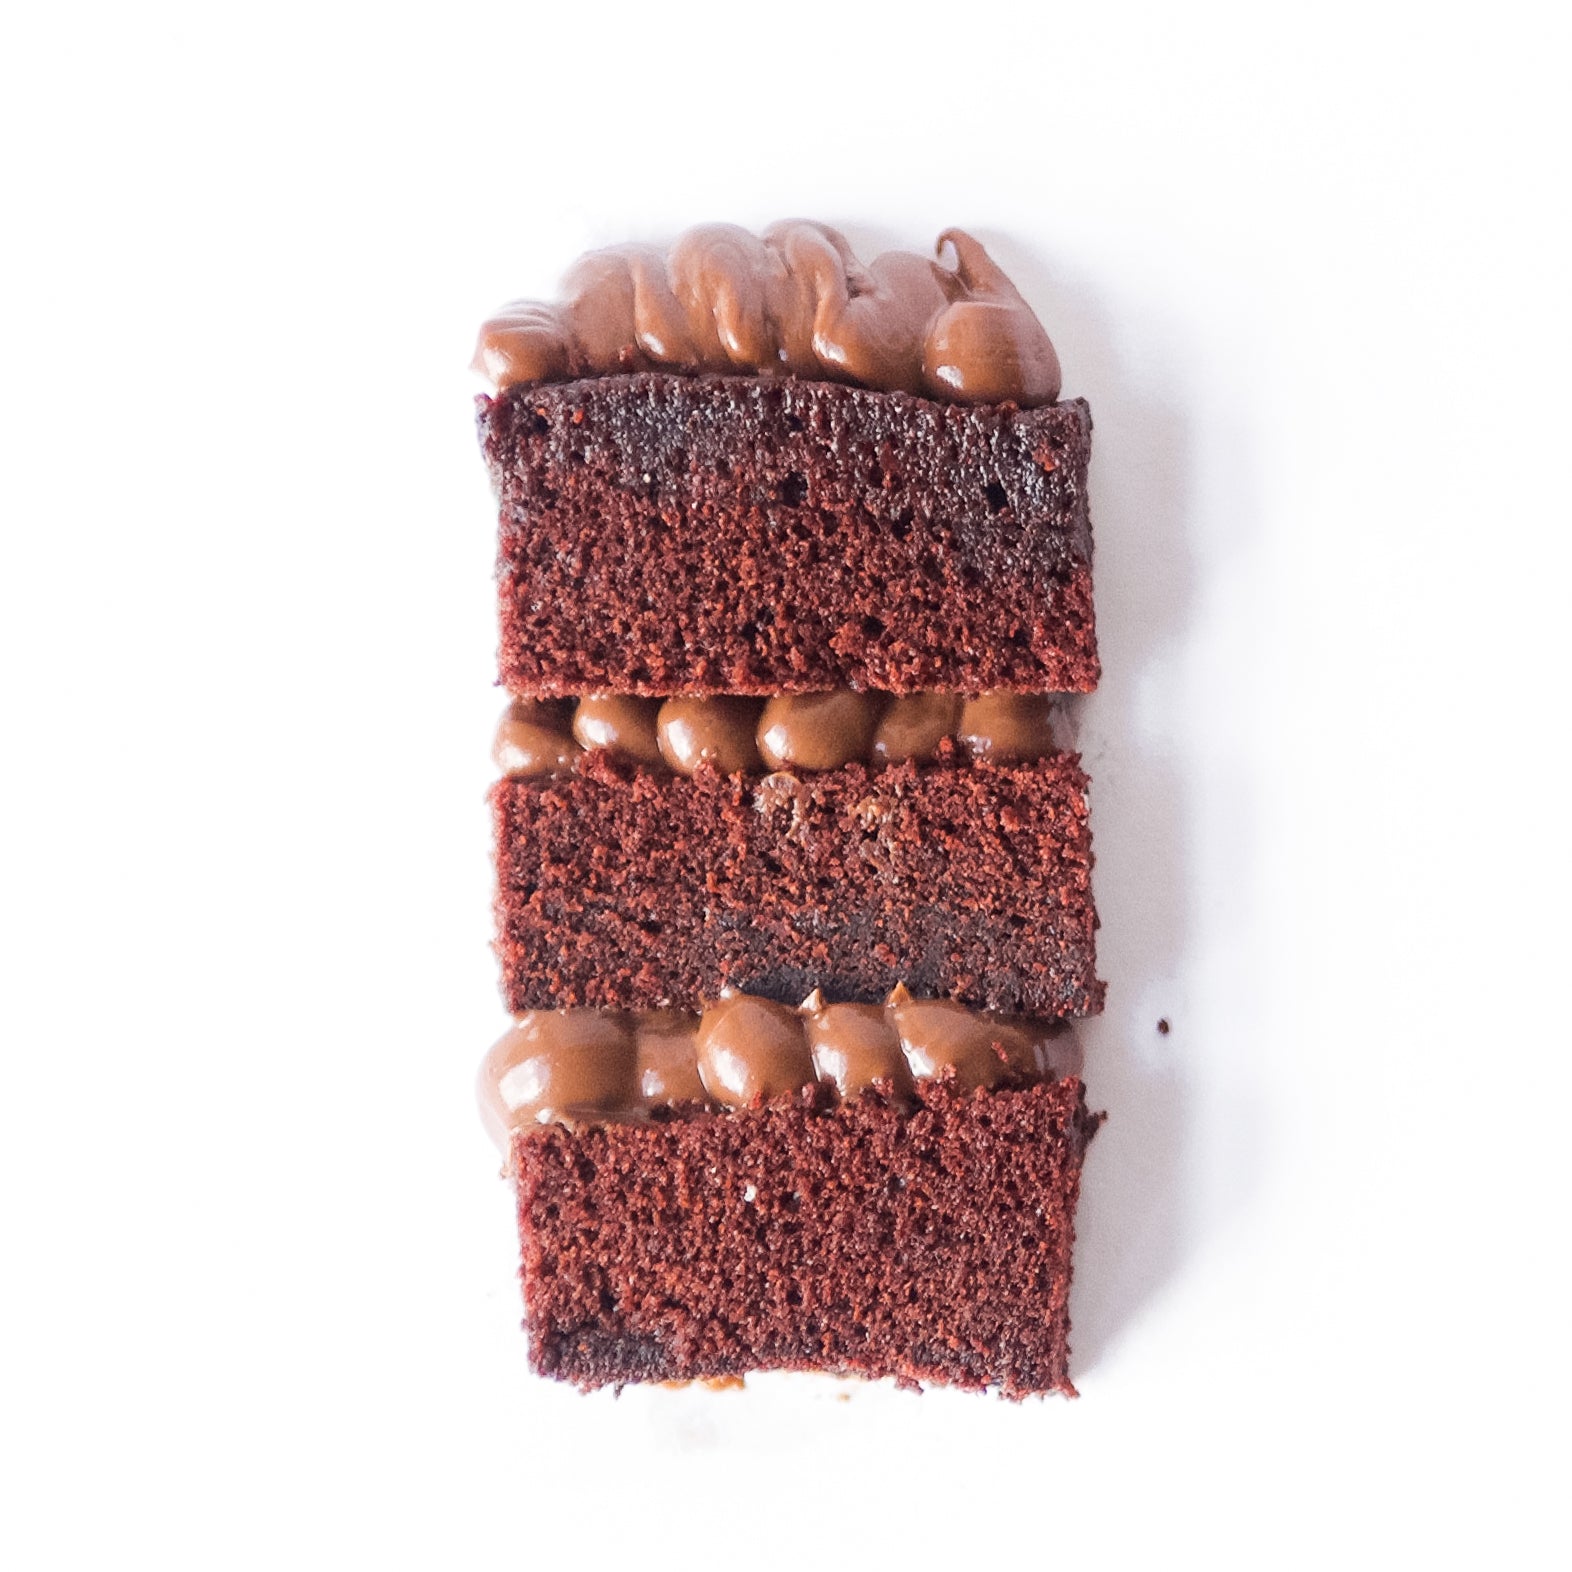 Chocolate sponge cake with sprinkles | Tesco Real Food